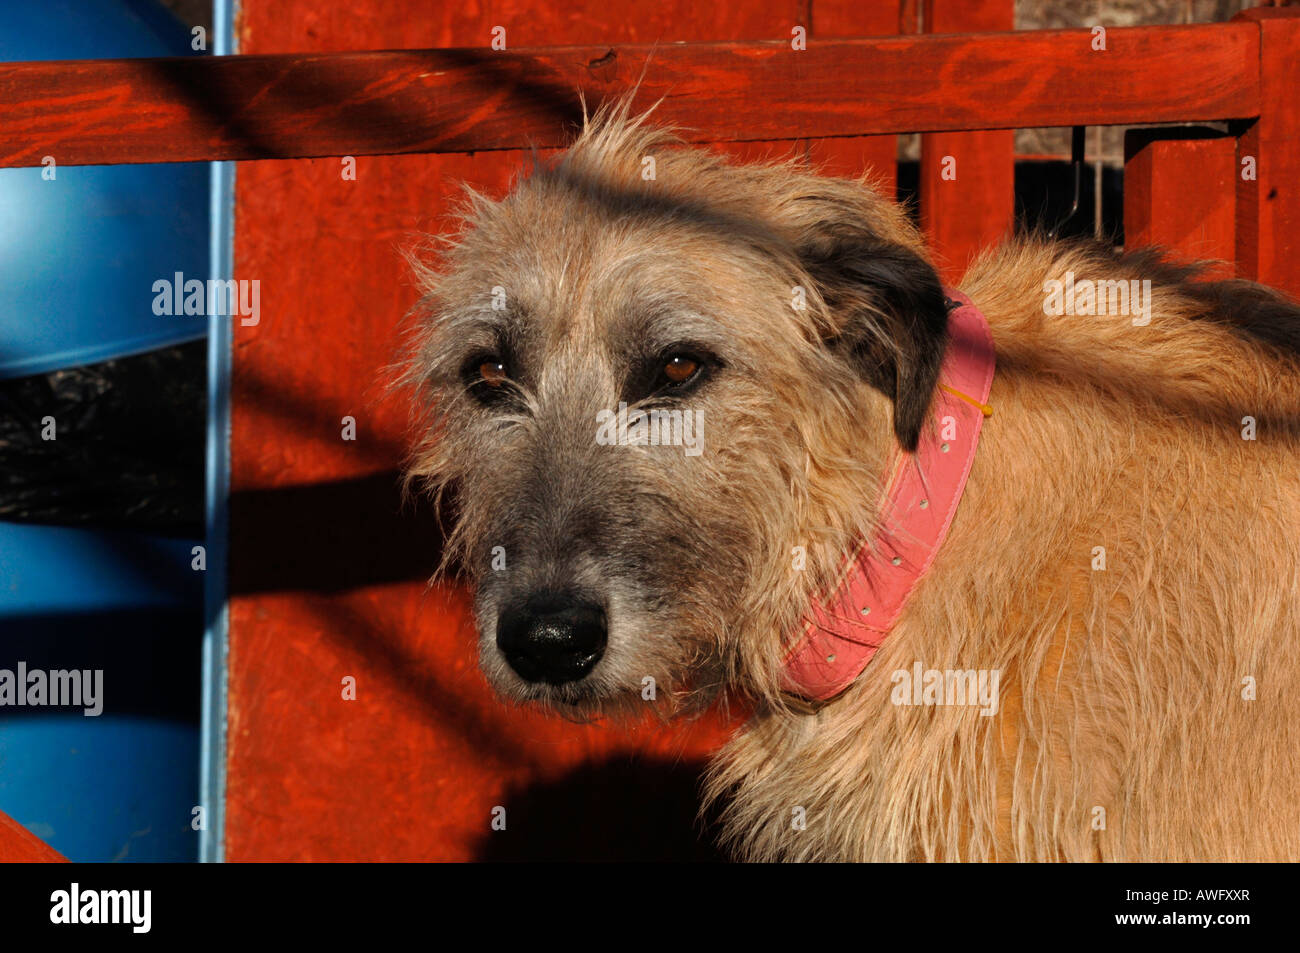 Portrait Of An Irish Wolfhound Dog. Stock Photo